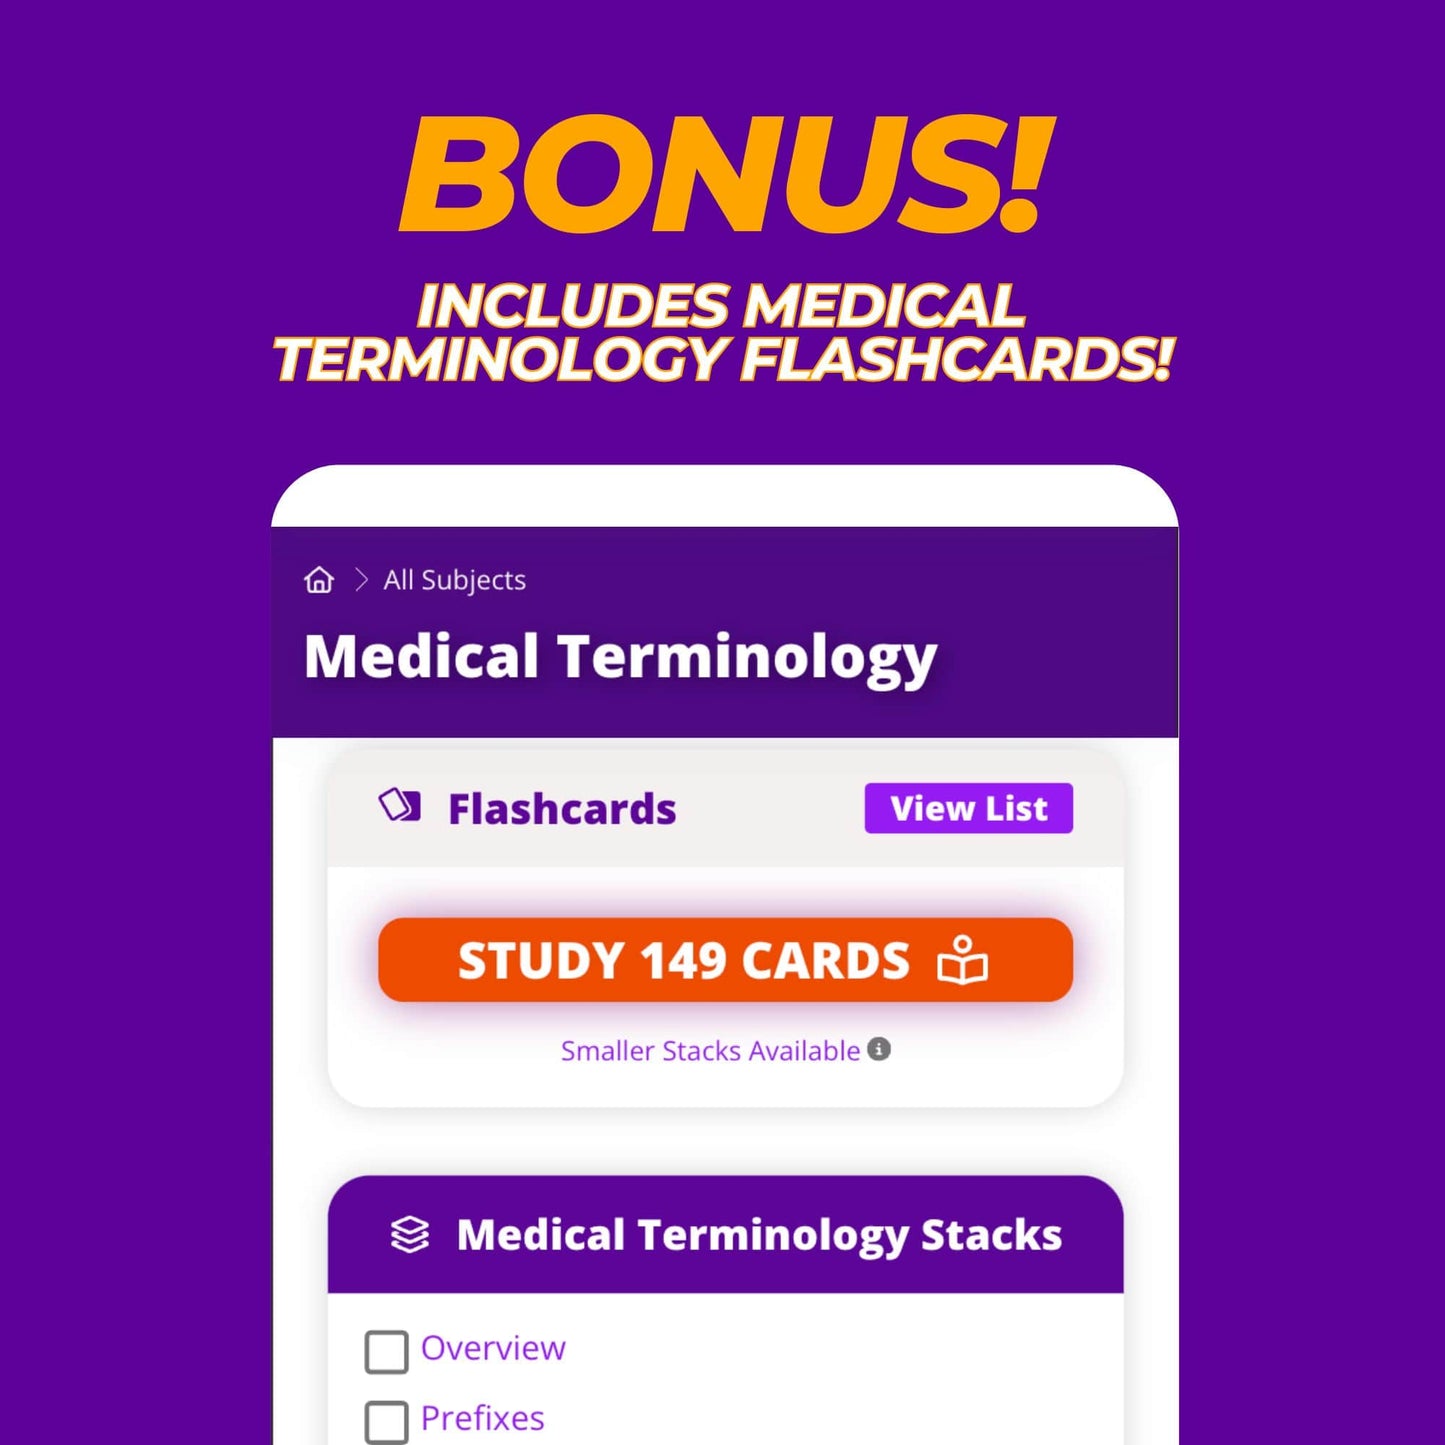 Bonus! Includes Medical Terminology Flashcards